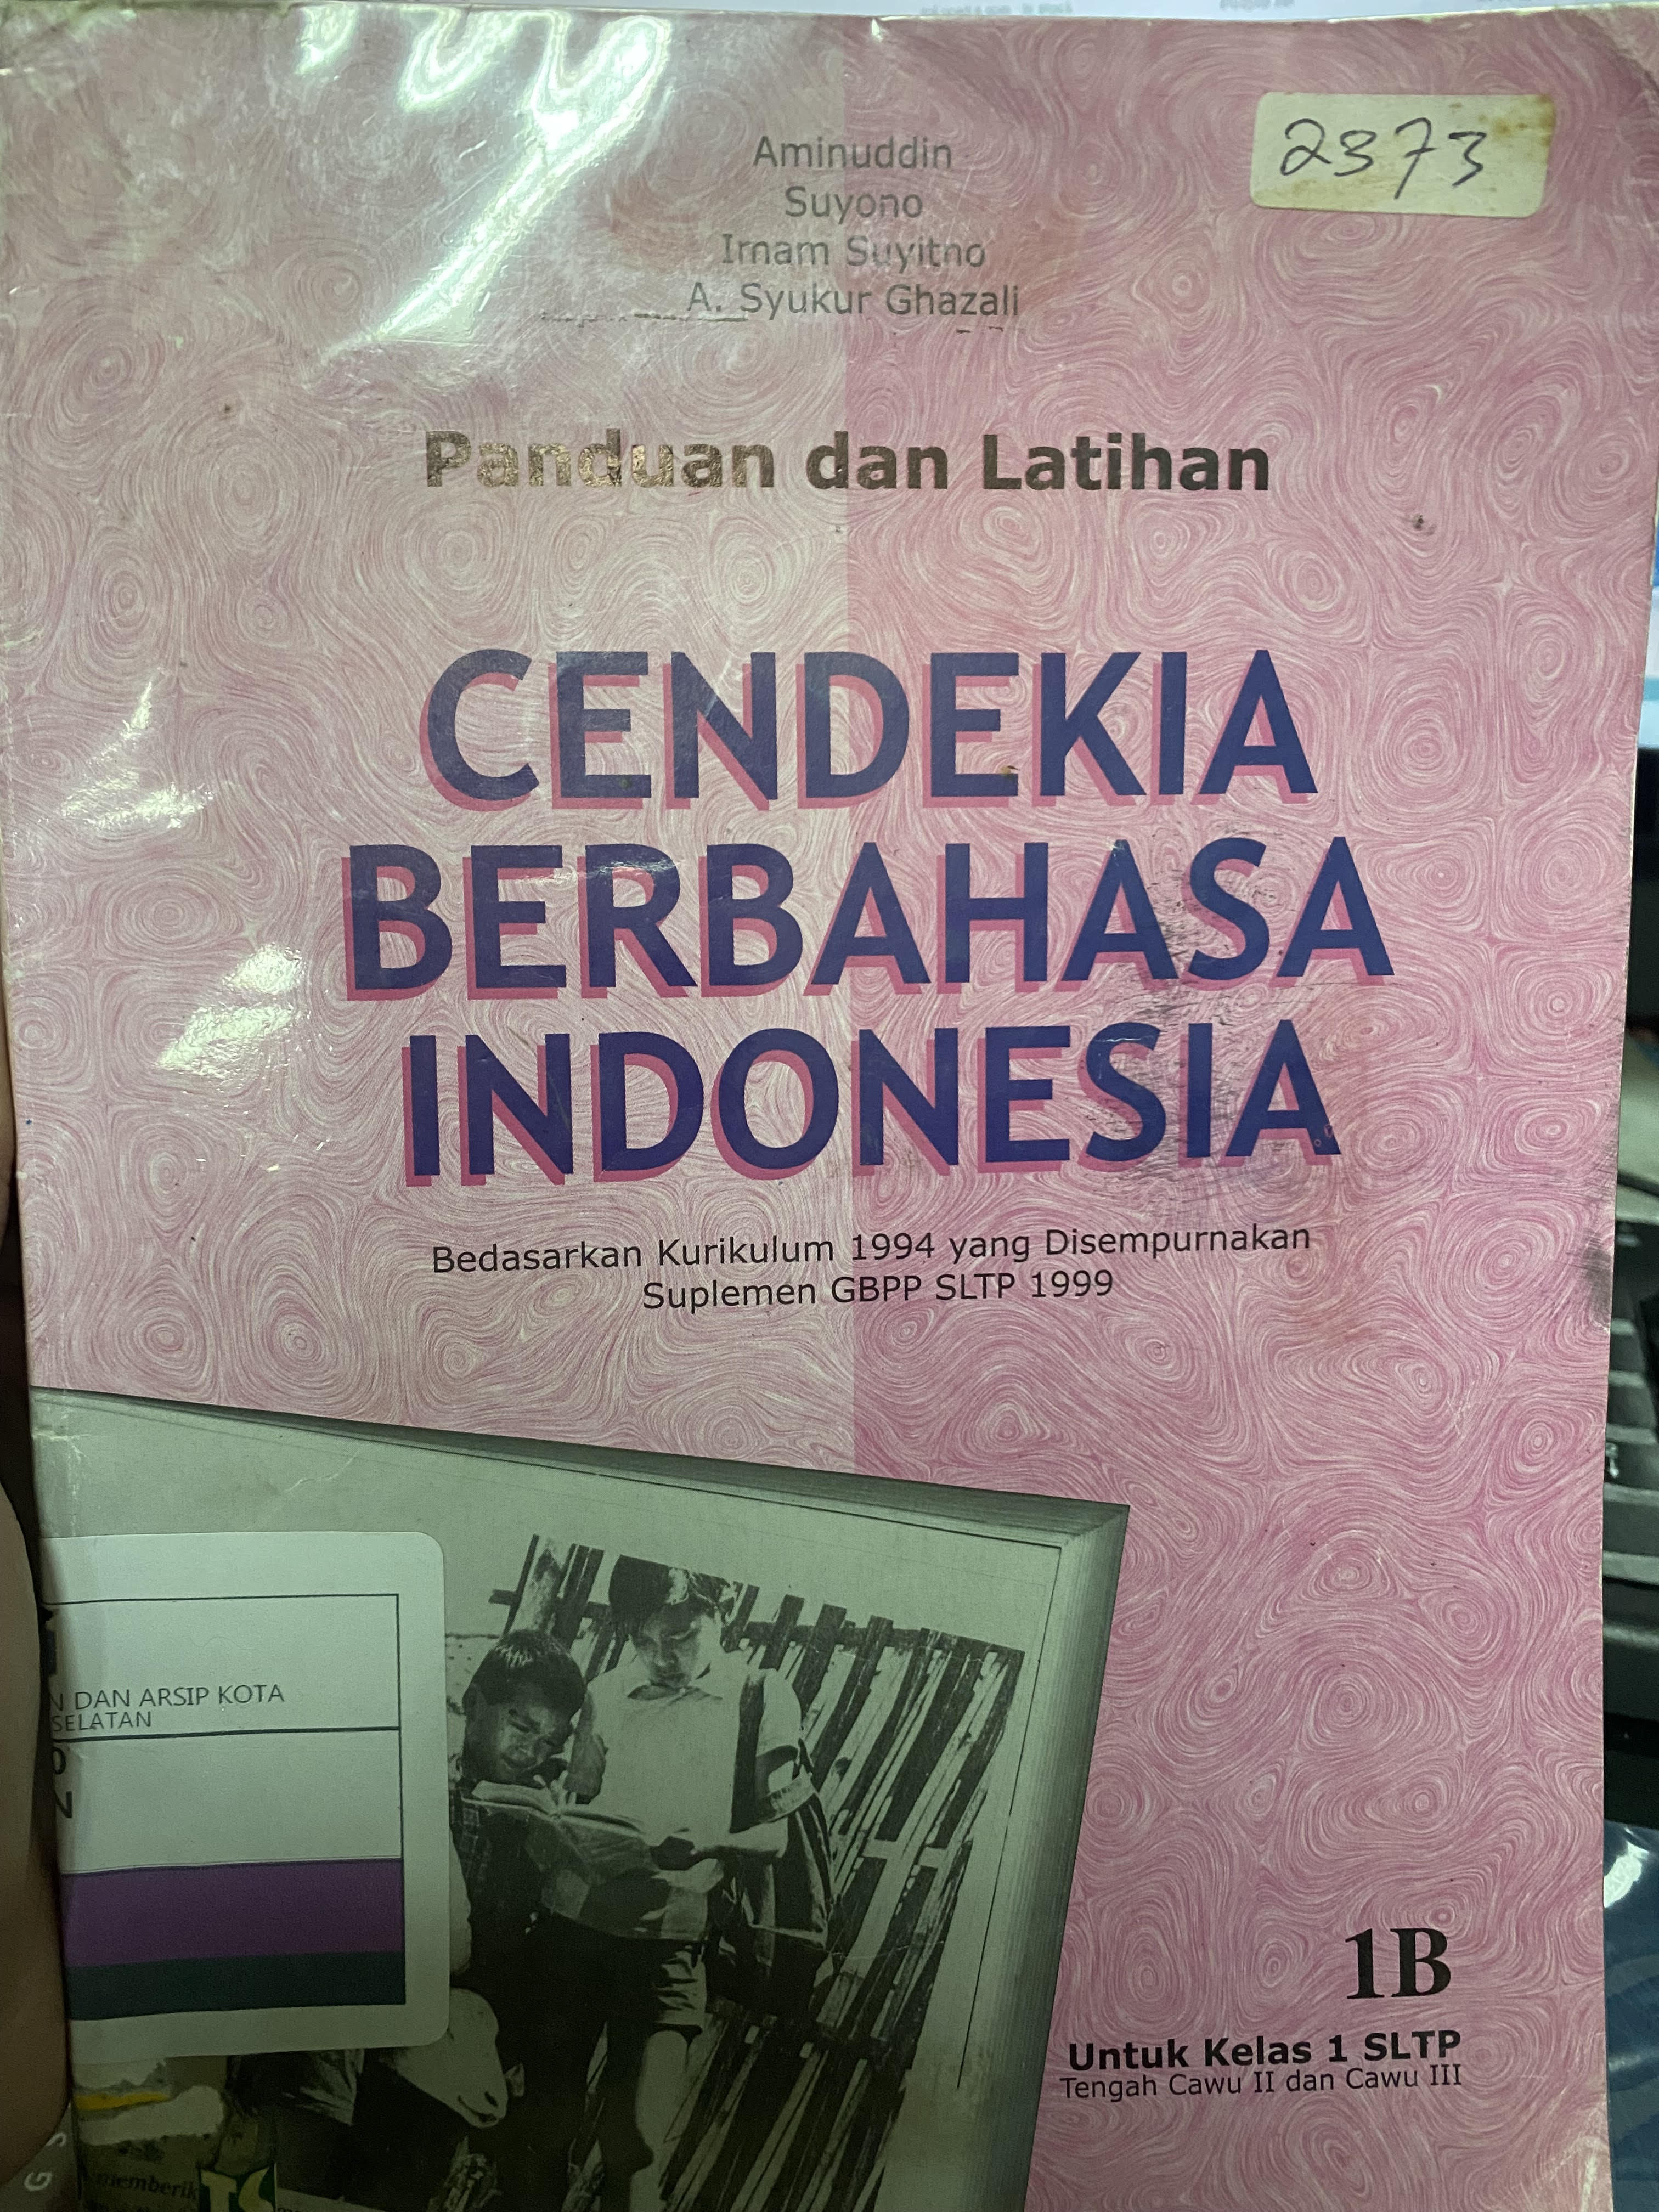 Panduan dan latihan Cendekia berbahasa Indonesia :  berdasarkan kurikulum 1994 yang disempurnakan suplemen GBPP SLTP 1999